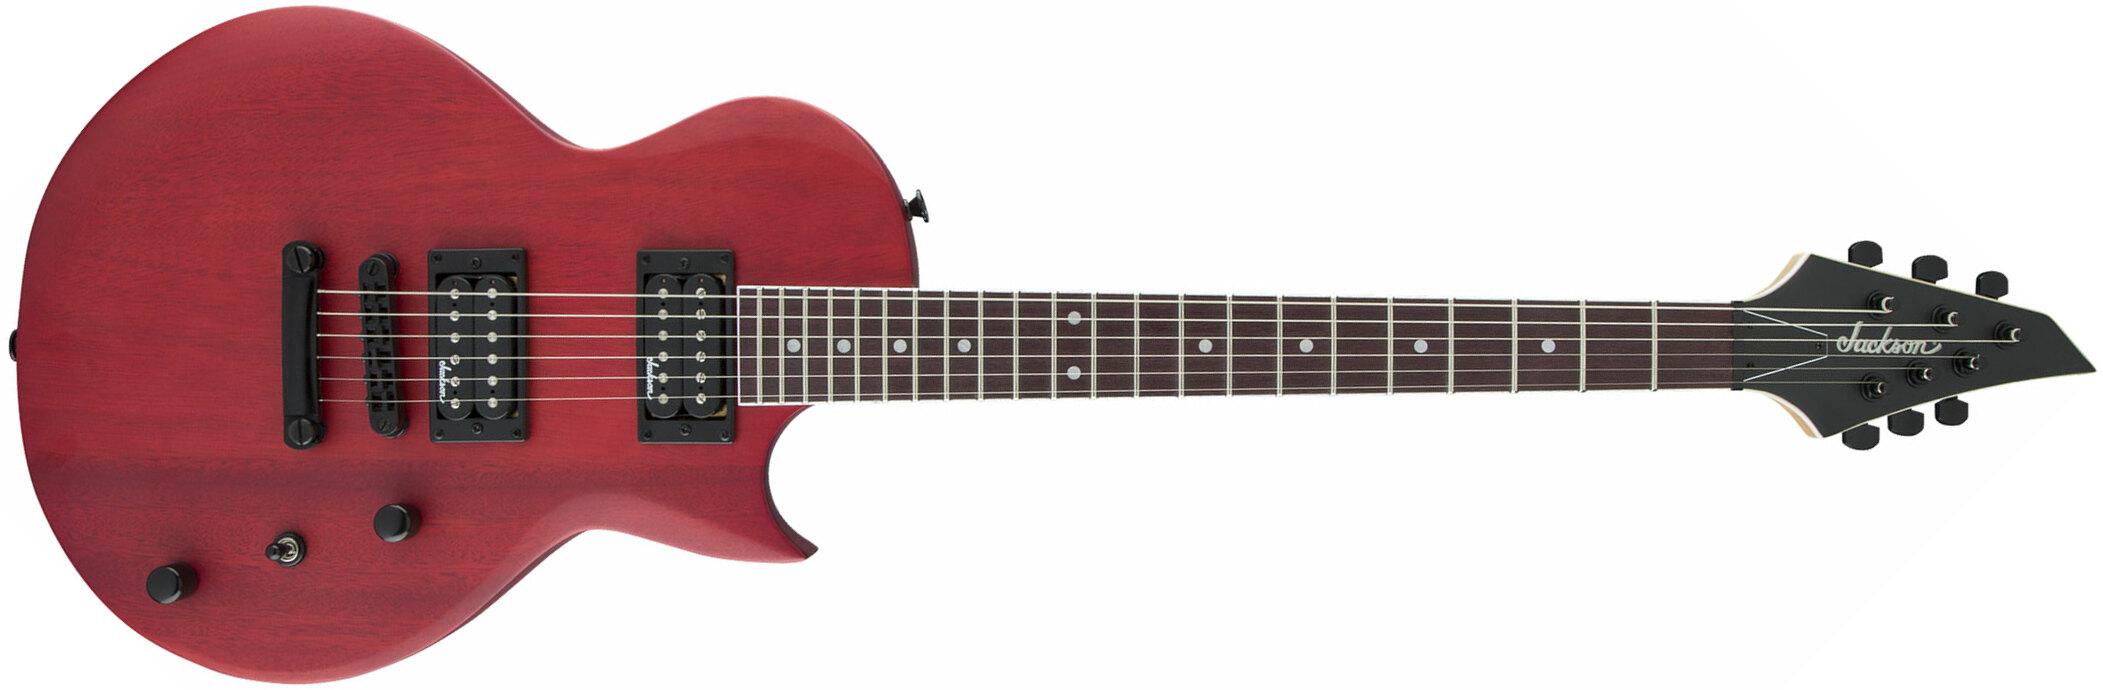 Jackson Monarkh Sc Js22 2h Ht Ama - Red Stain - Enkel gesneden elektrische gitaar - Main picture